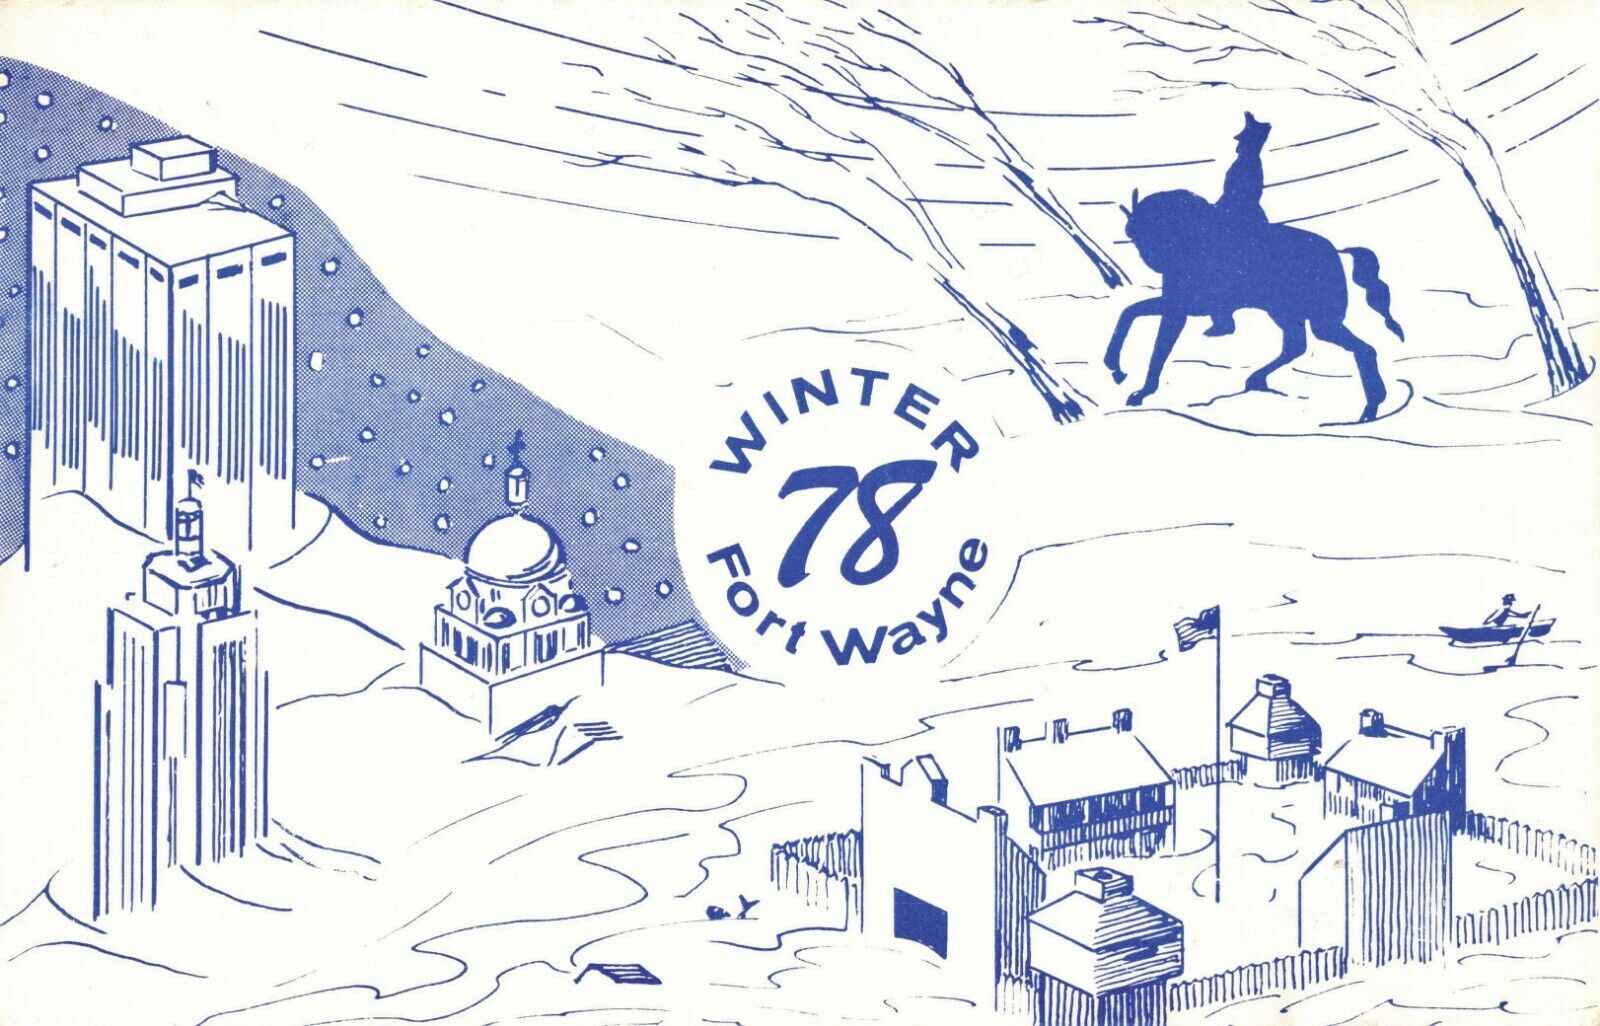 Winter 1978 Fort Wayne postcard